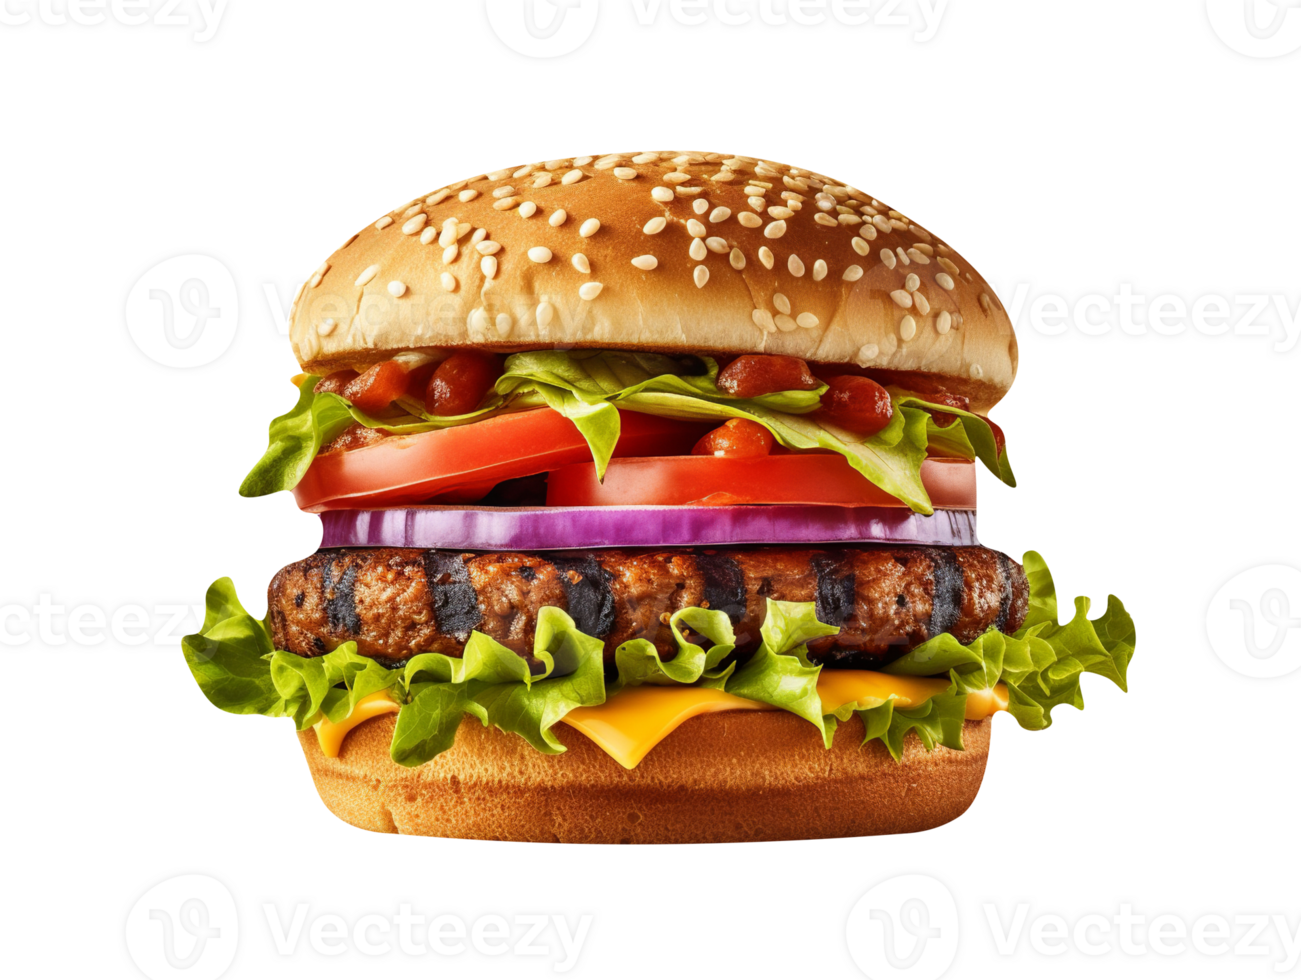 fresco gustoso veggie hamburger isolato su bianca sfondo png